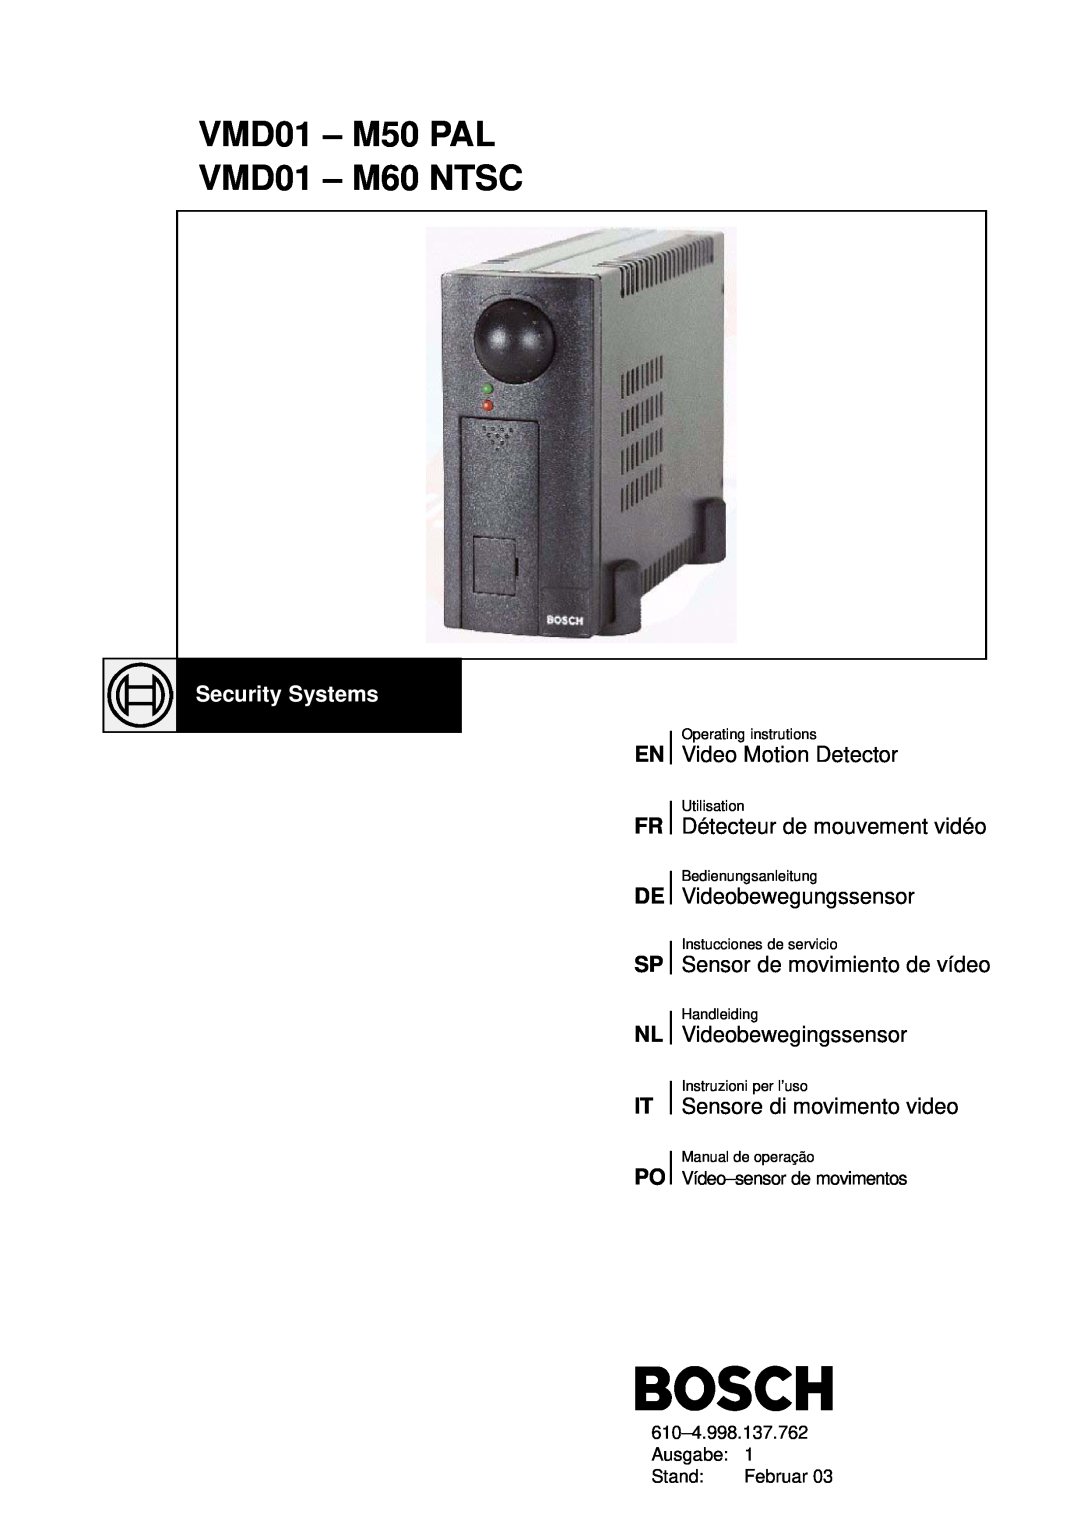 Bosch Appliances VMD01 M50 PAL manual Video Motion Detector, Détecteur de mouvement vidéo, Videobewegungssensor 